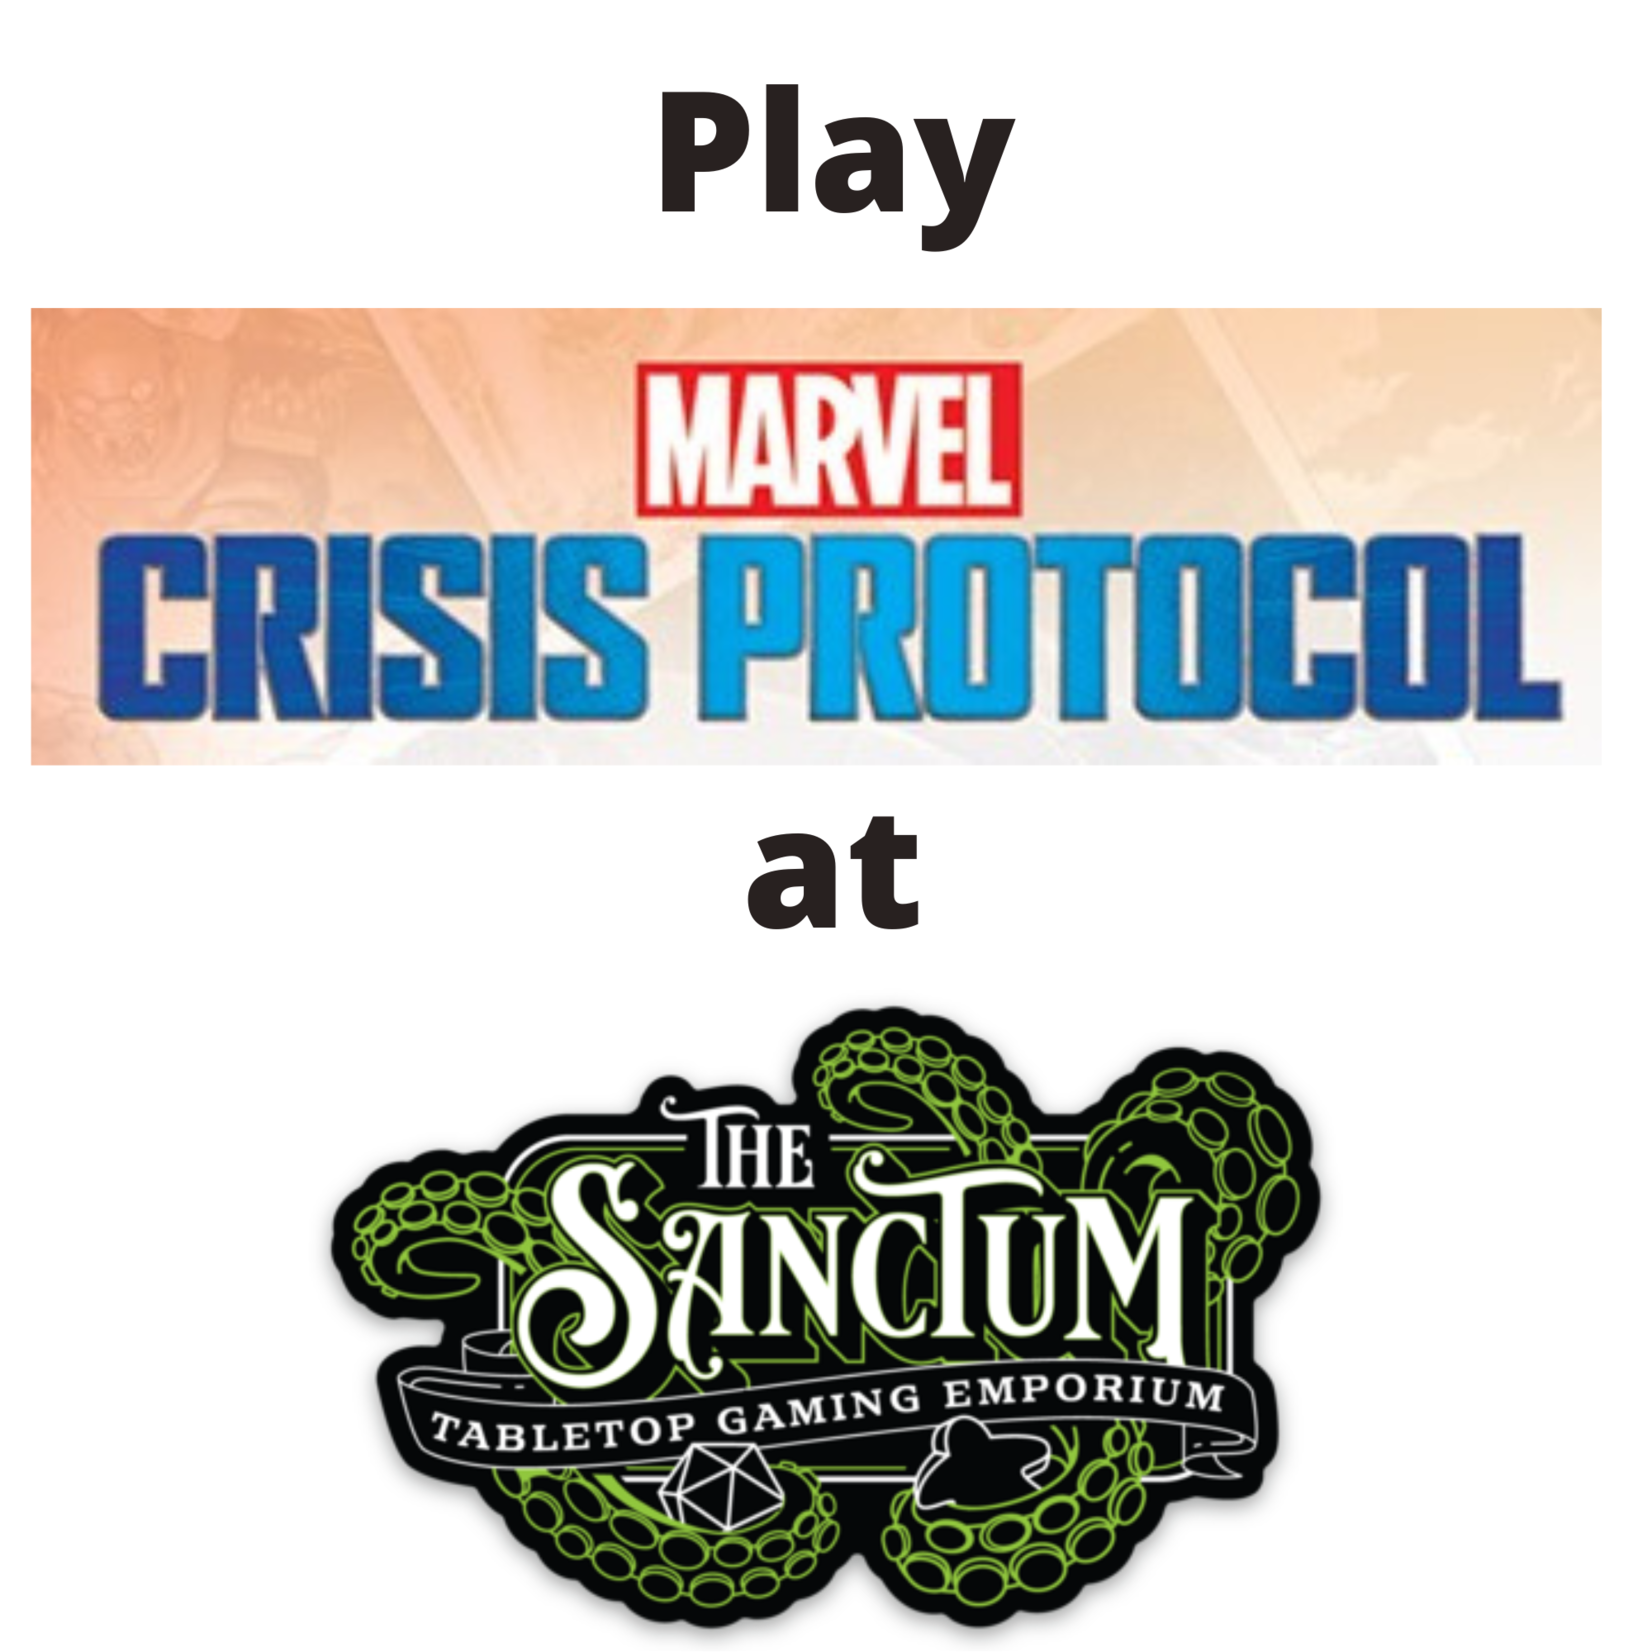 Miniature Tactics Game, Biweekly on Fridays at 5 pm: Marvel Crisis Protocol